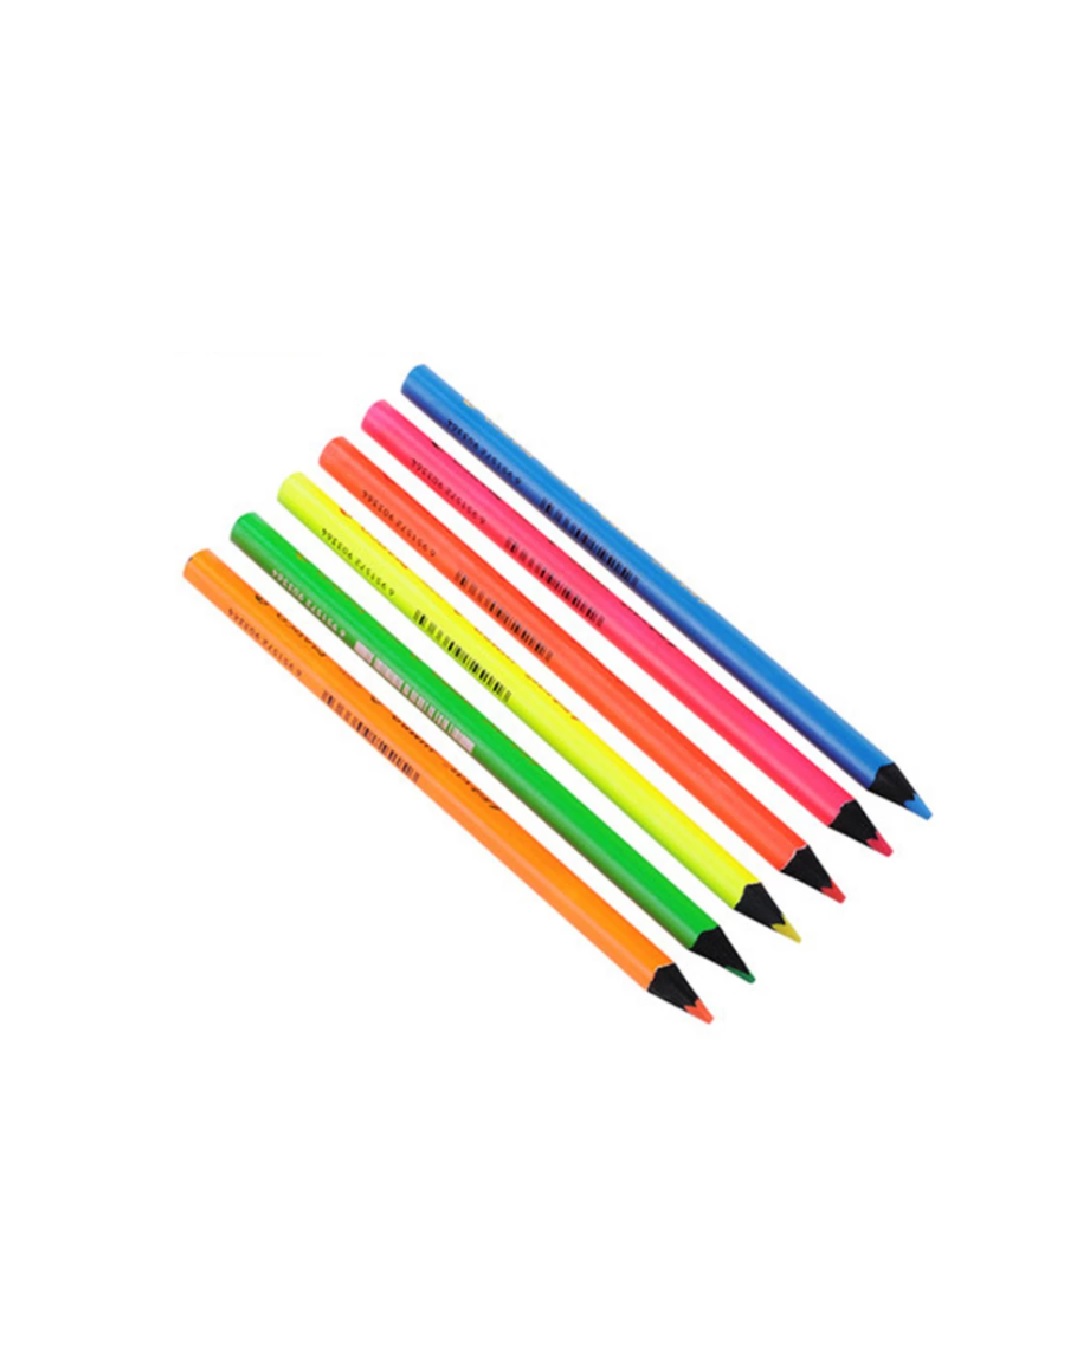 Fluro coloured pencils